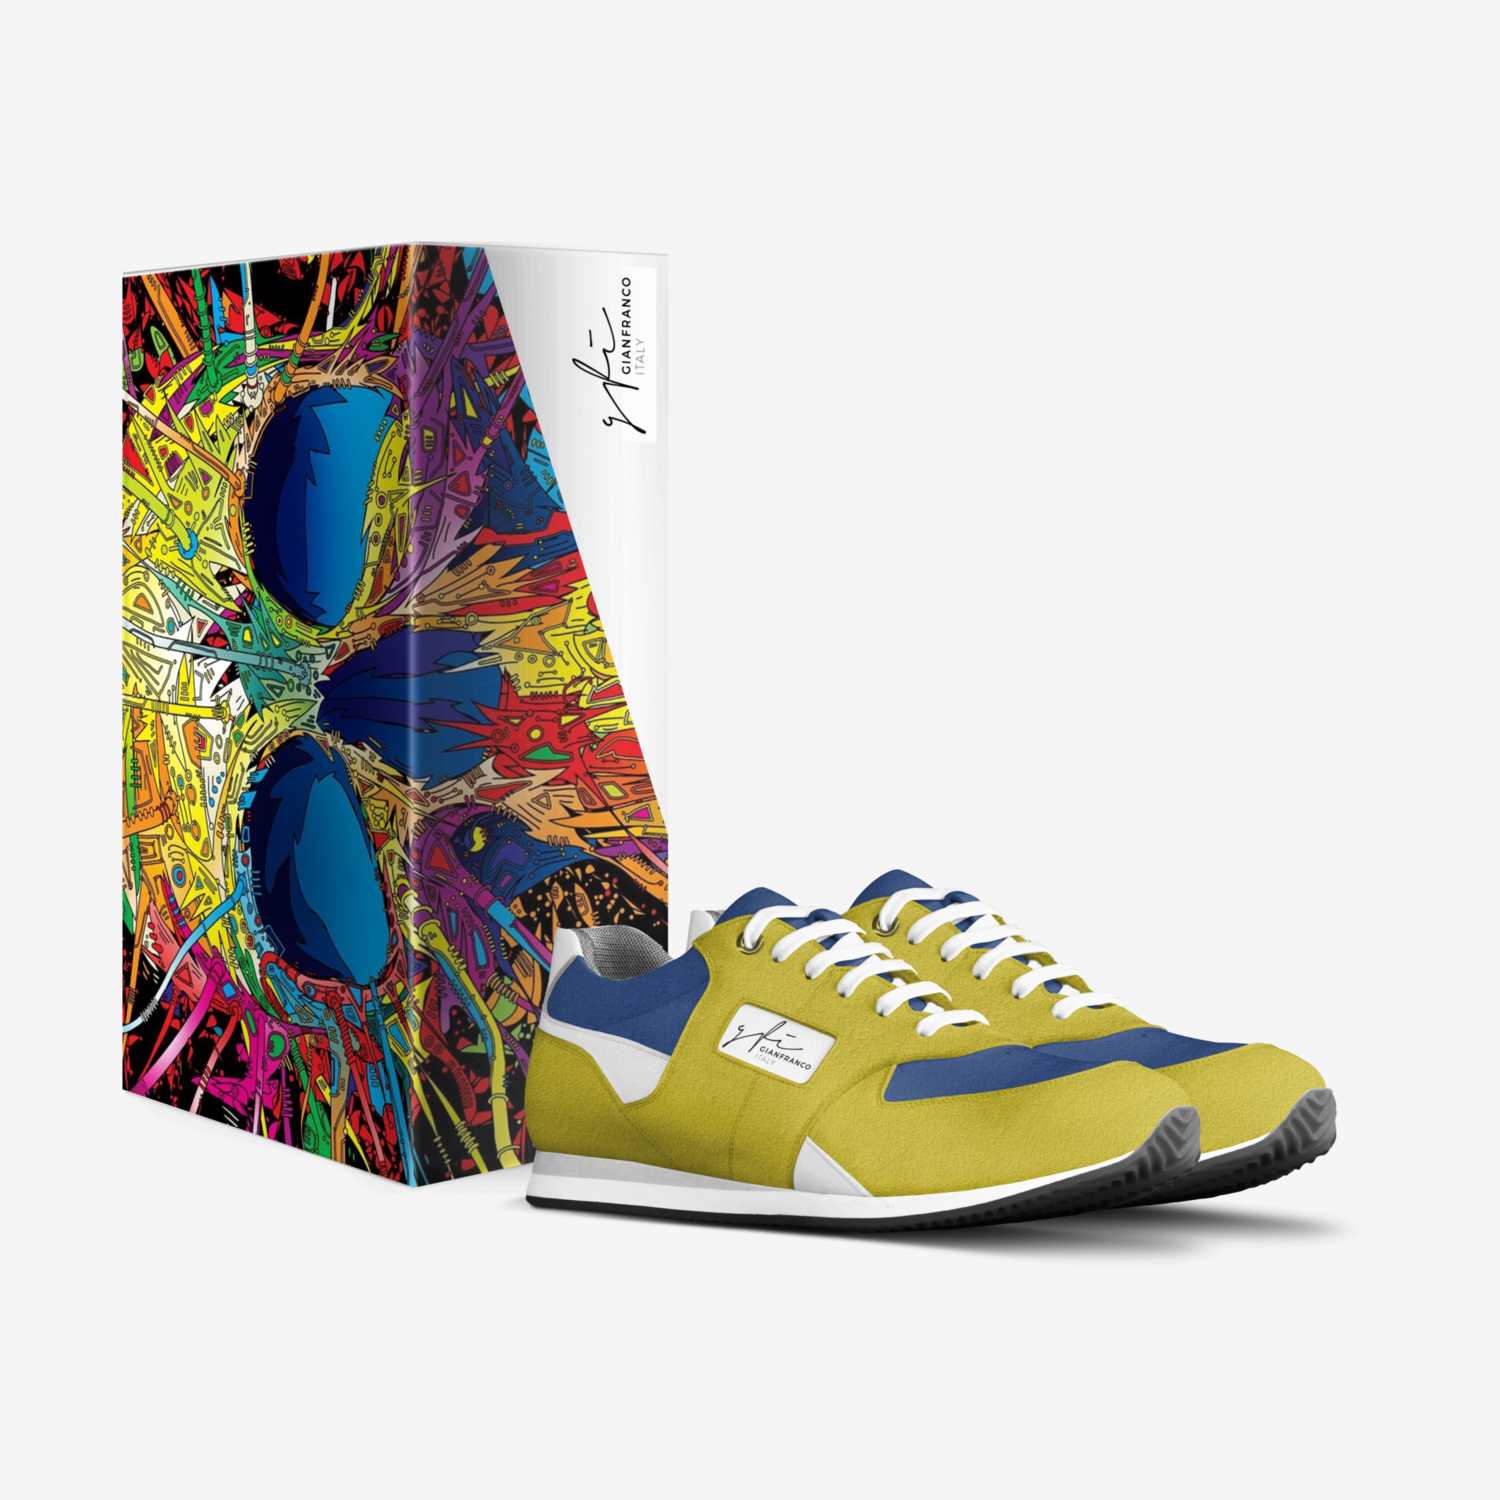 GianFranco XXIII custom made in Italy shoes by Jason Best | Box view